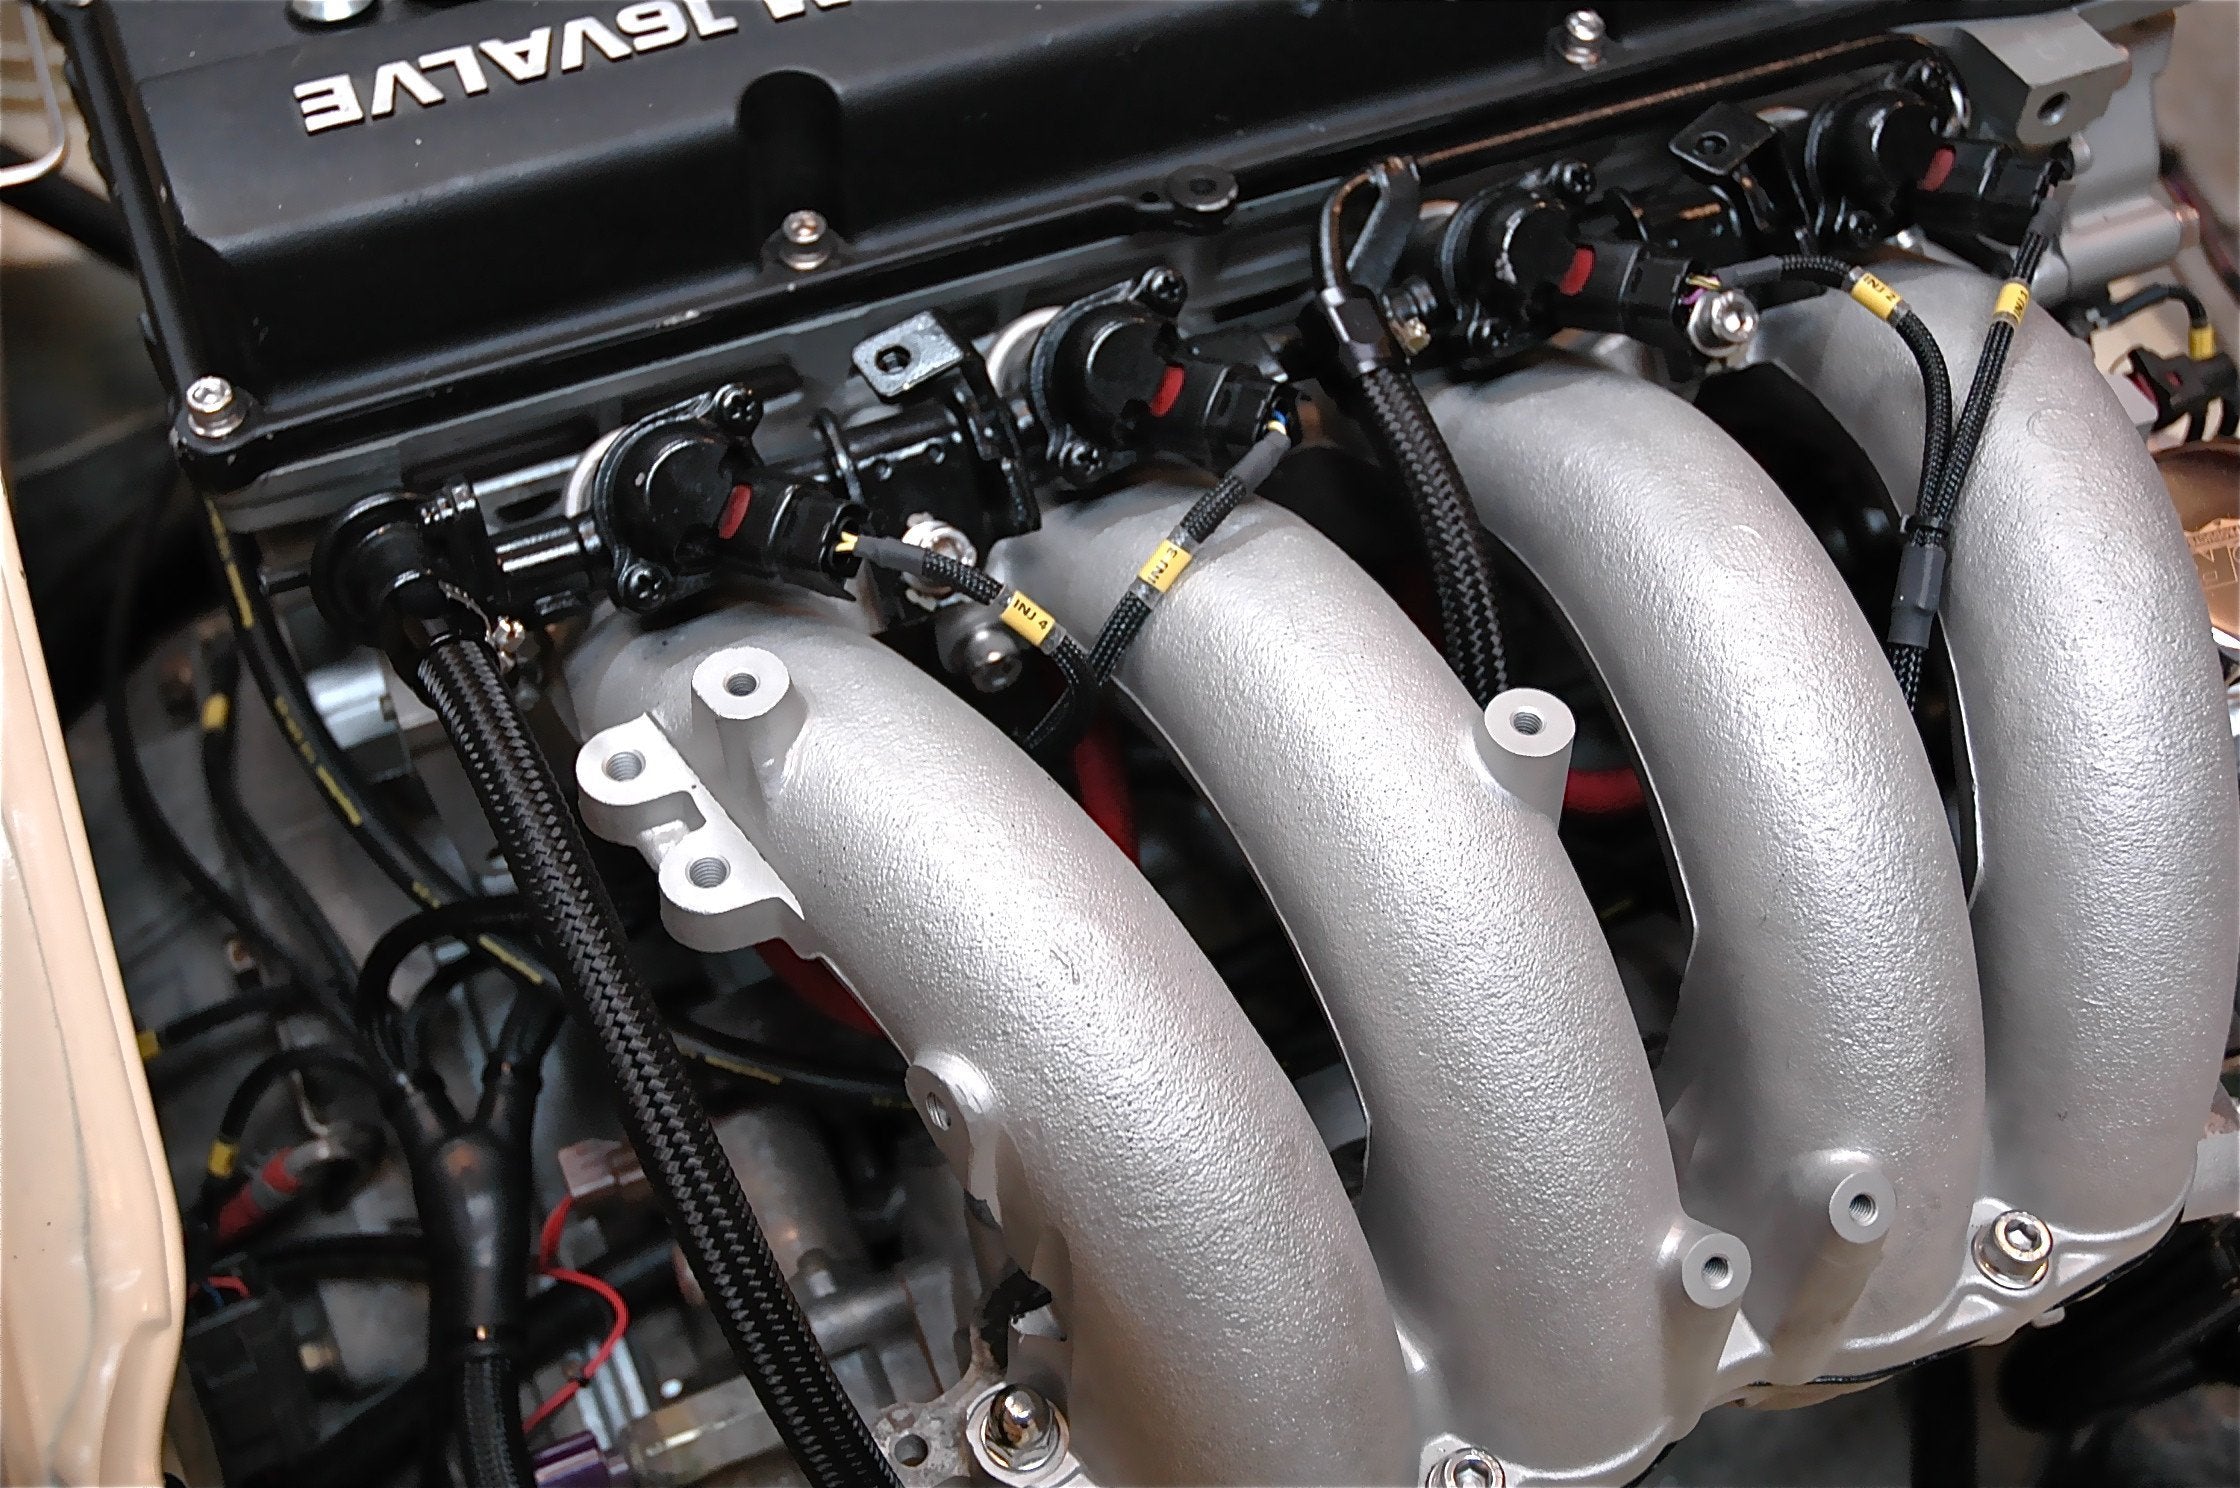 CHASE BAYS Nissan Silvia S13 S14 S15 Fuel Line Kit with Nissan KA24DE SR20DET Engine - PARTS33 GmbH